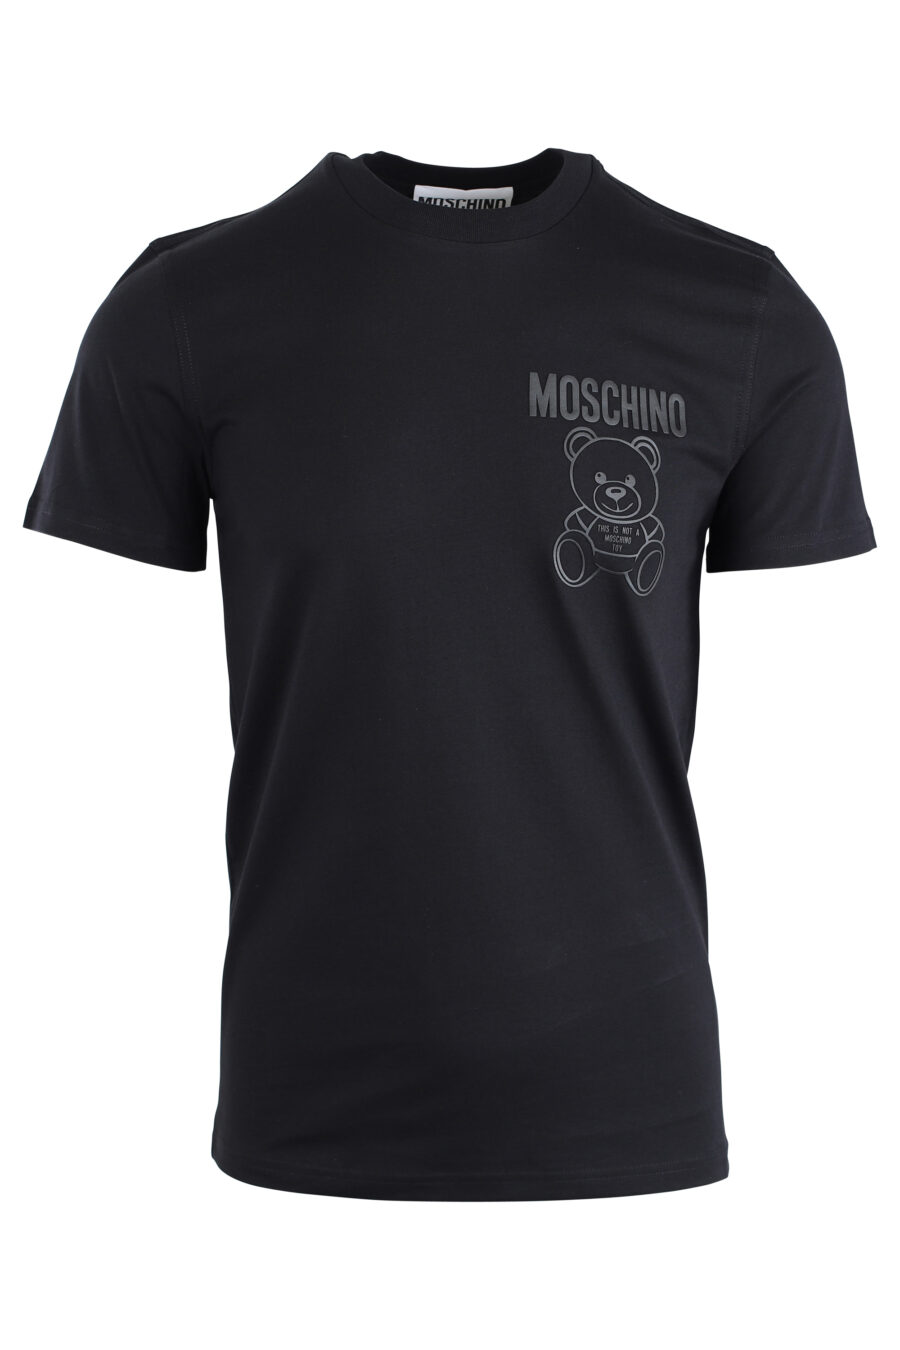 Black T-shirt with monochrome bear minilogue - IMG 1669